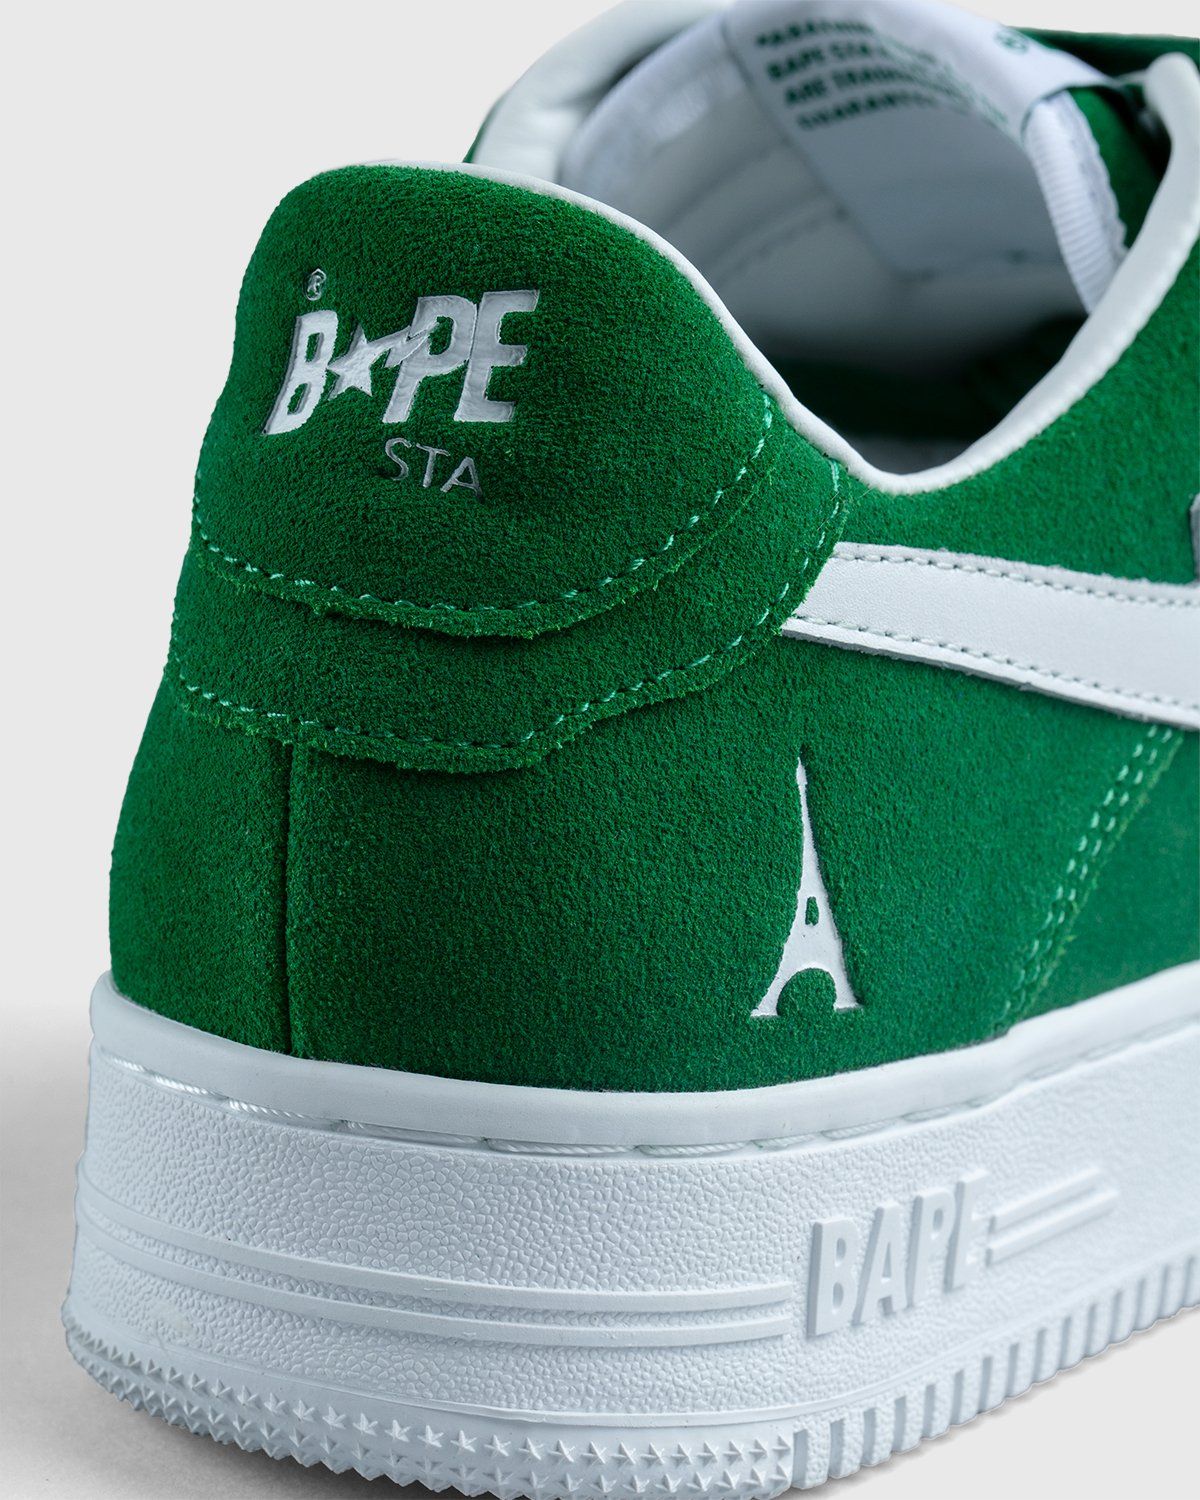 BAPE x Highsnobiety – BAPE STA Green - Sneakers - Green - Image 7